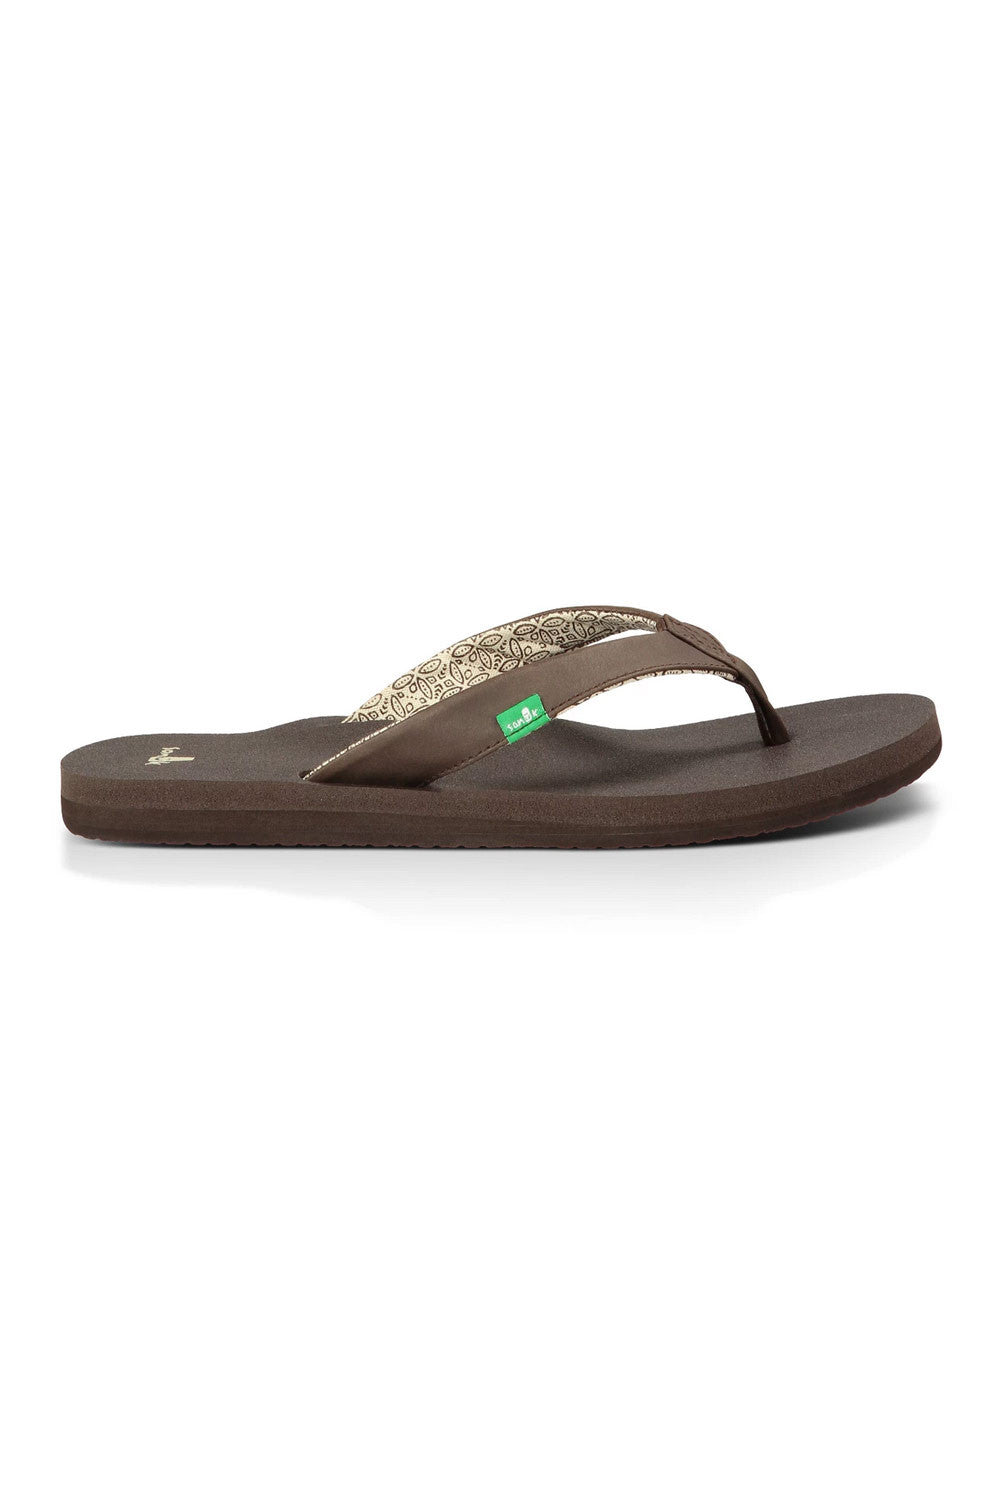 Sanuk Yoga Mat Yoga Zen Sandals– Mainland Skate & Surf